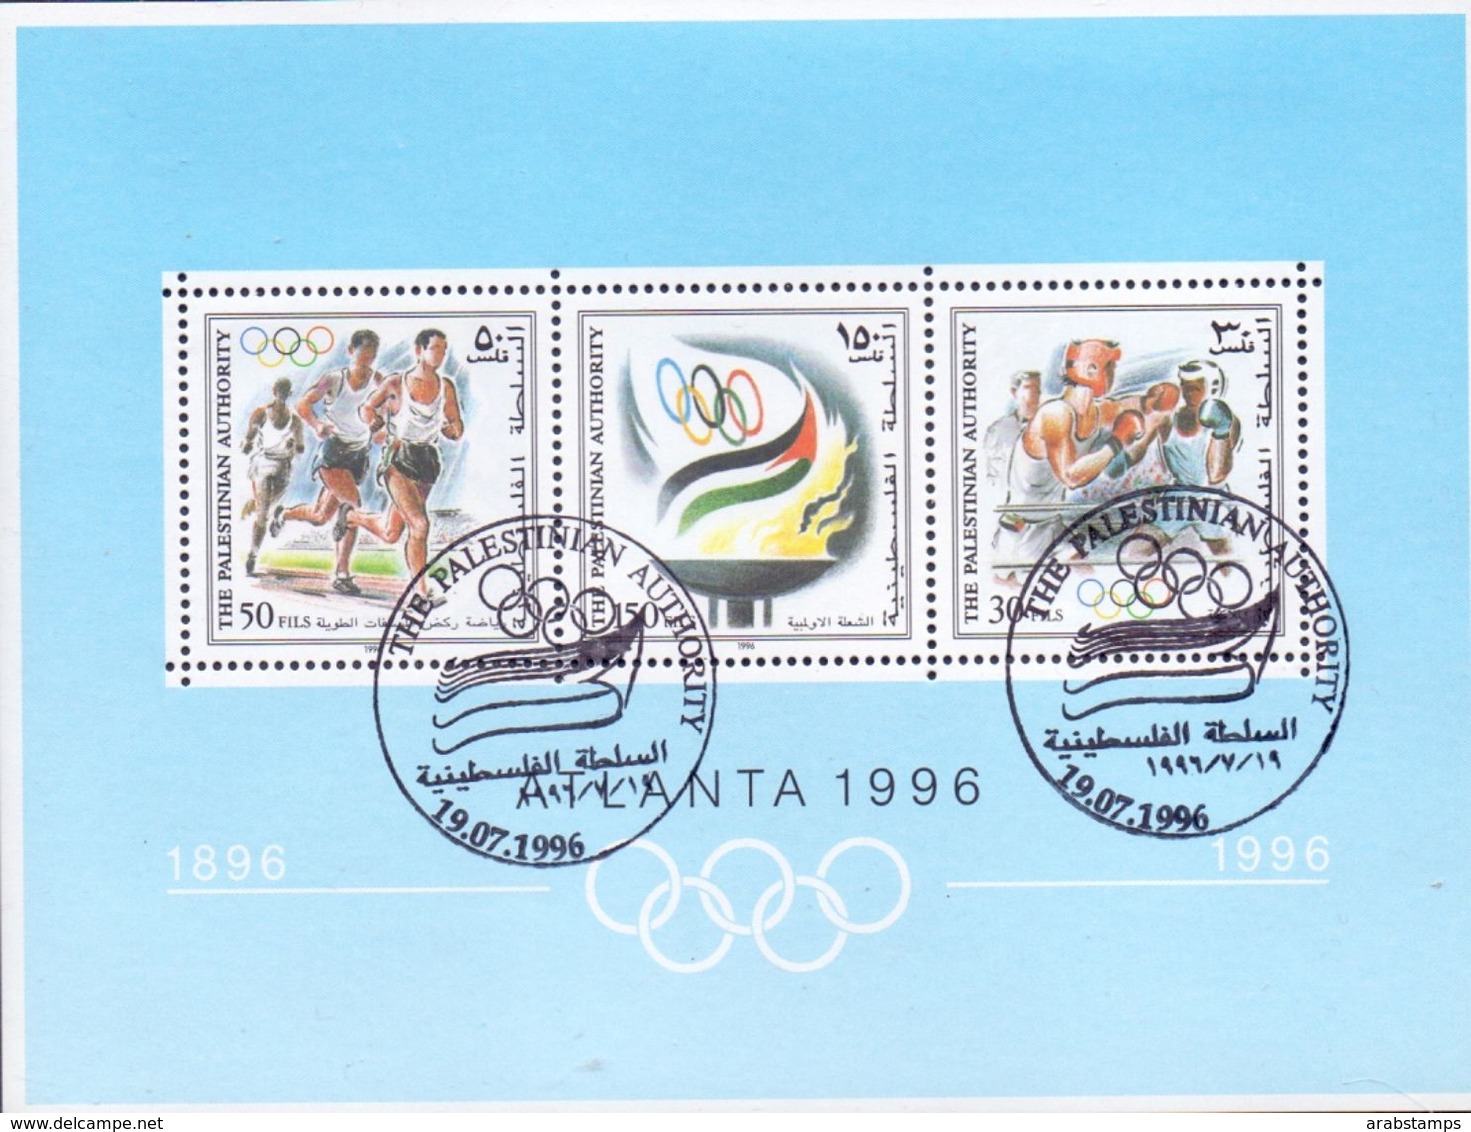 1996 Palestinian Olympics Games Atlanta Souvenir Sheets Special Stamp MNH - Palestine